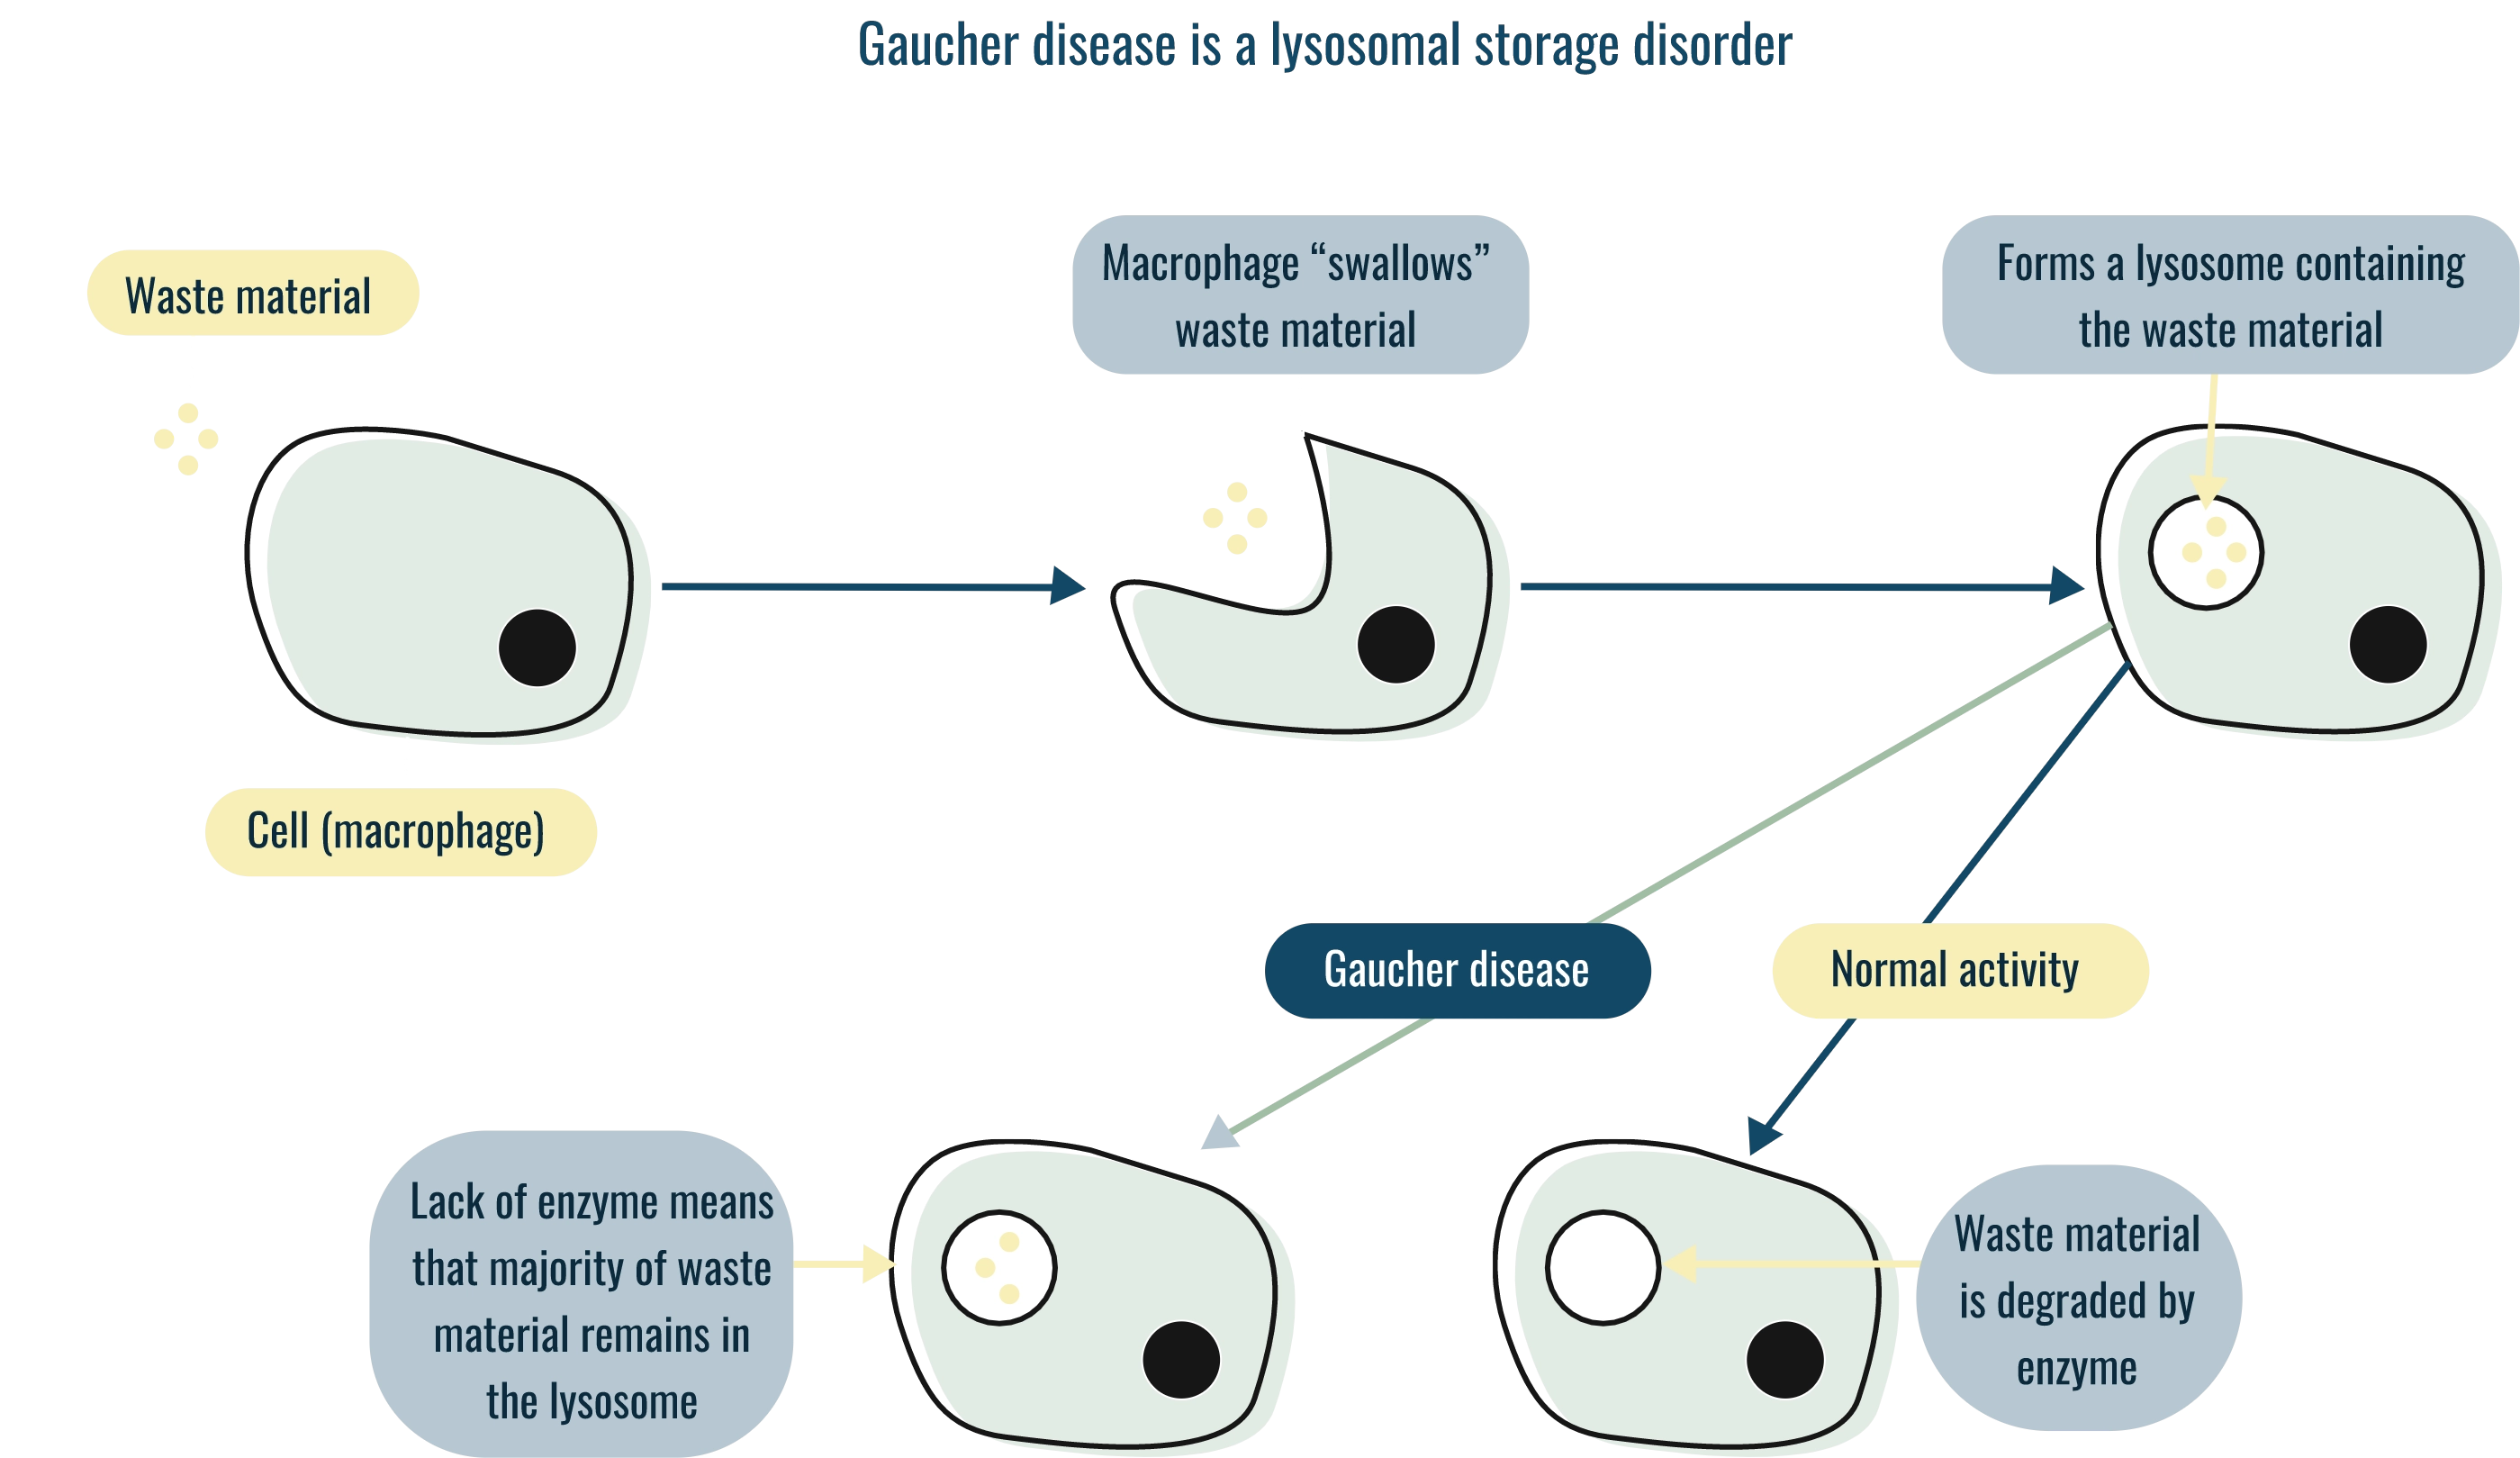 Gaucher mechanism of action diagram explaining how type 1 gaucher works as a lysosomal storage disorder.